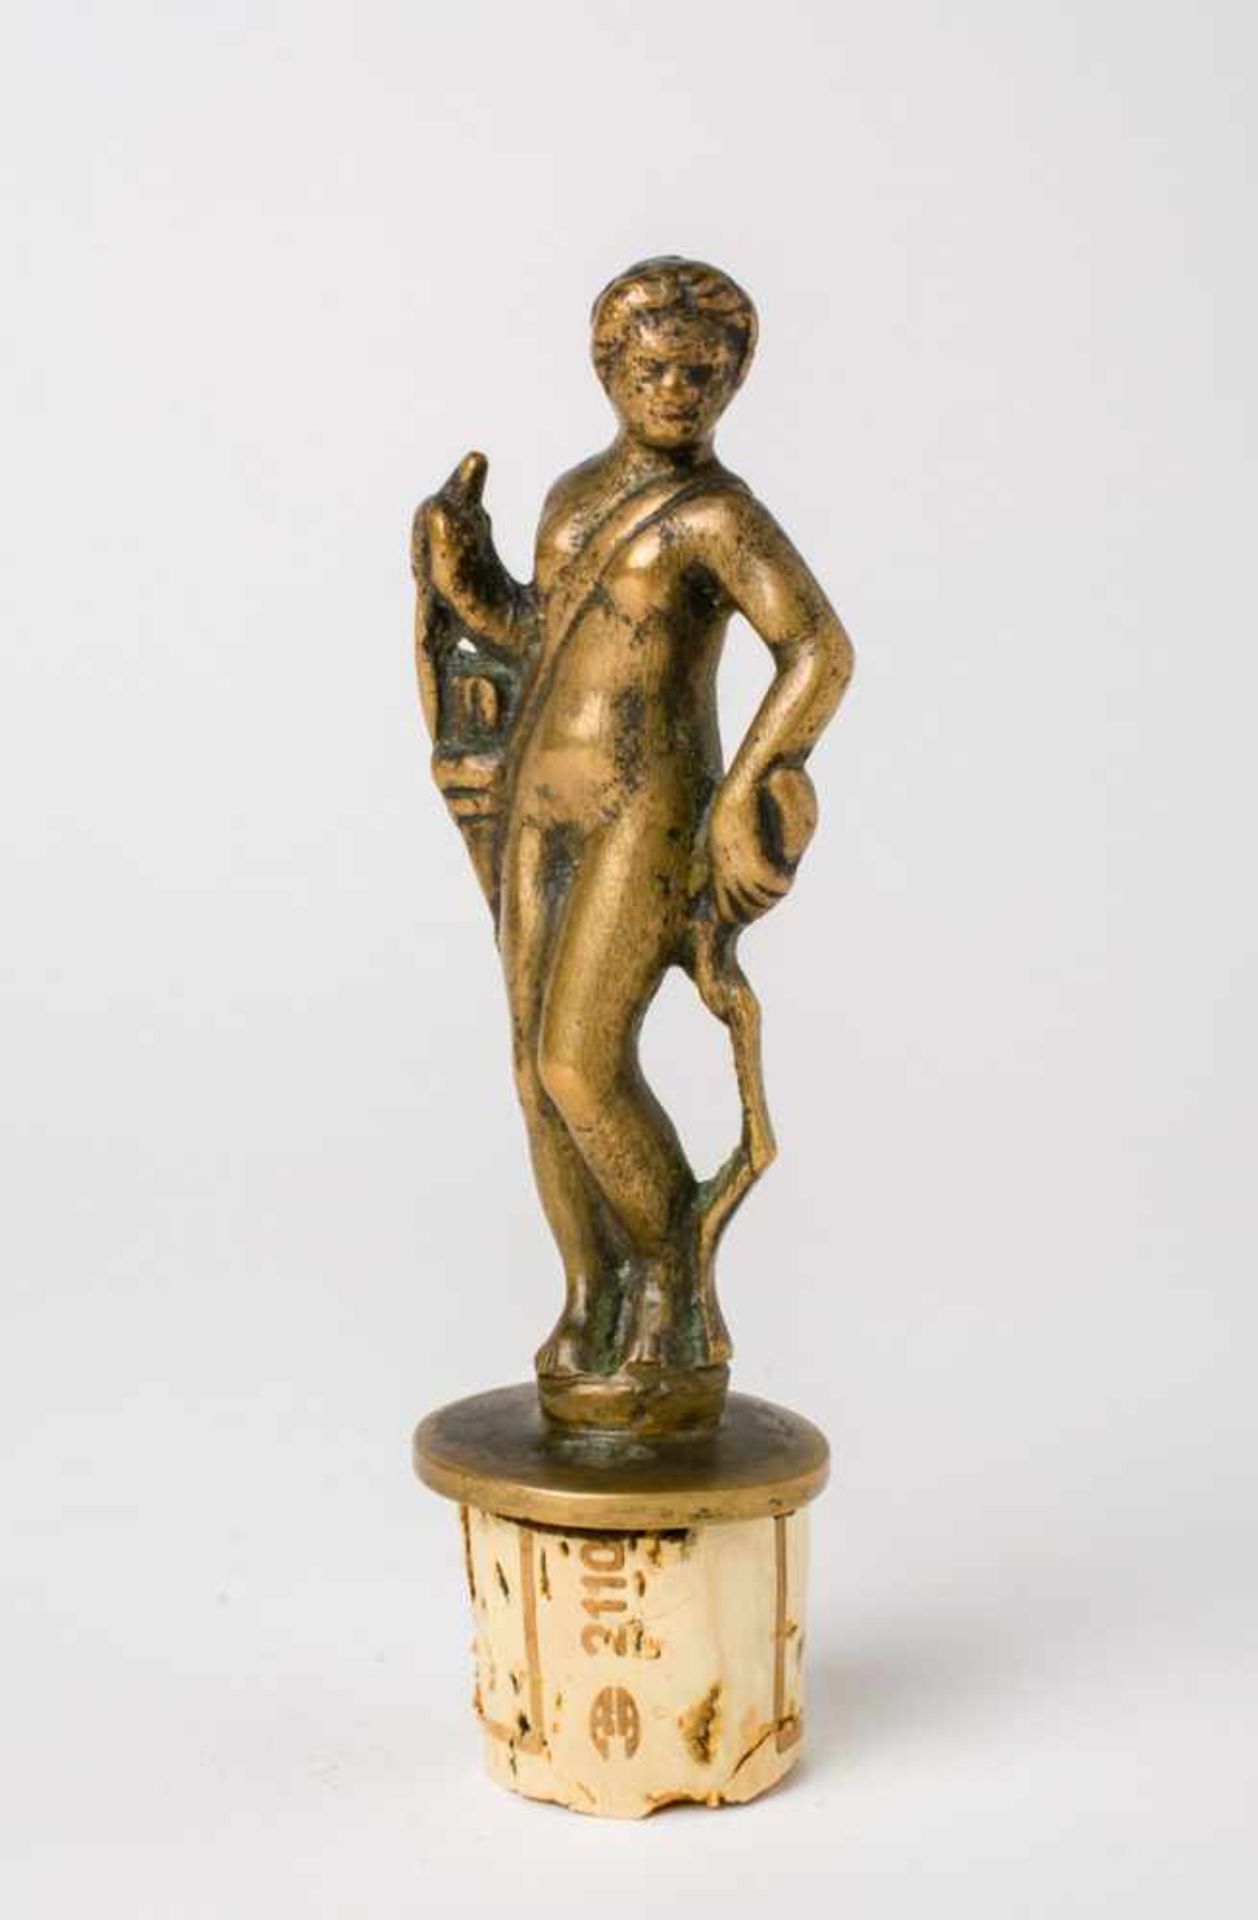 Diana Bronzefigur, Nürnberg, wohl 16. / 17. Jh. 7,8 cm hoch Diana, Bronze figure, Nuremberg,